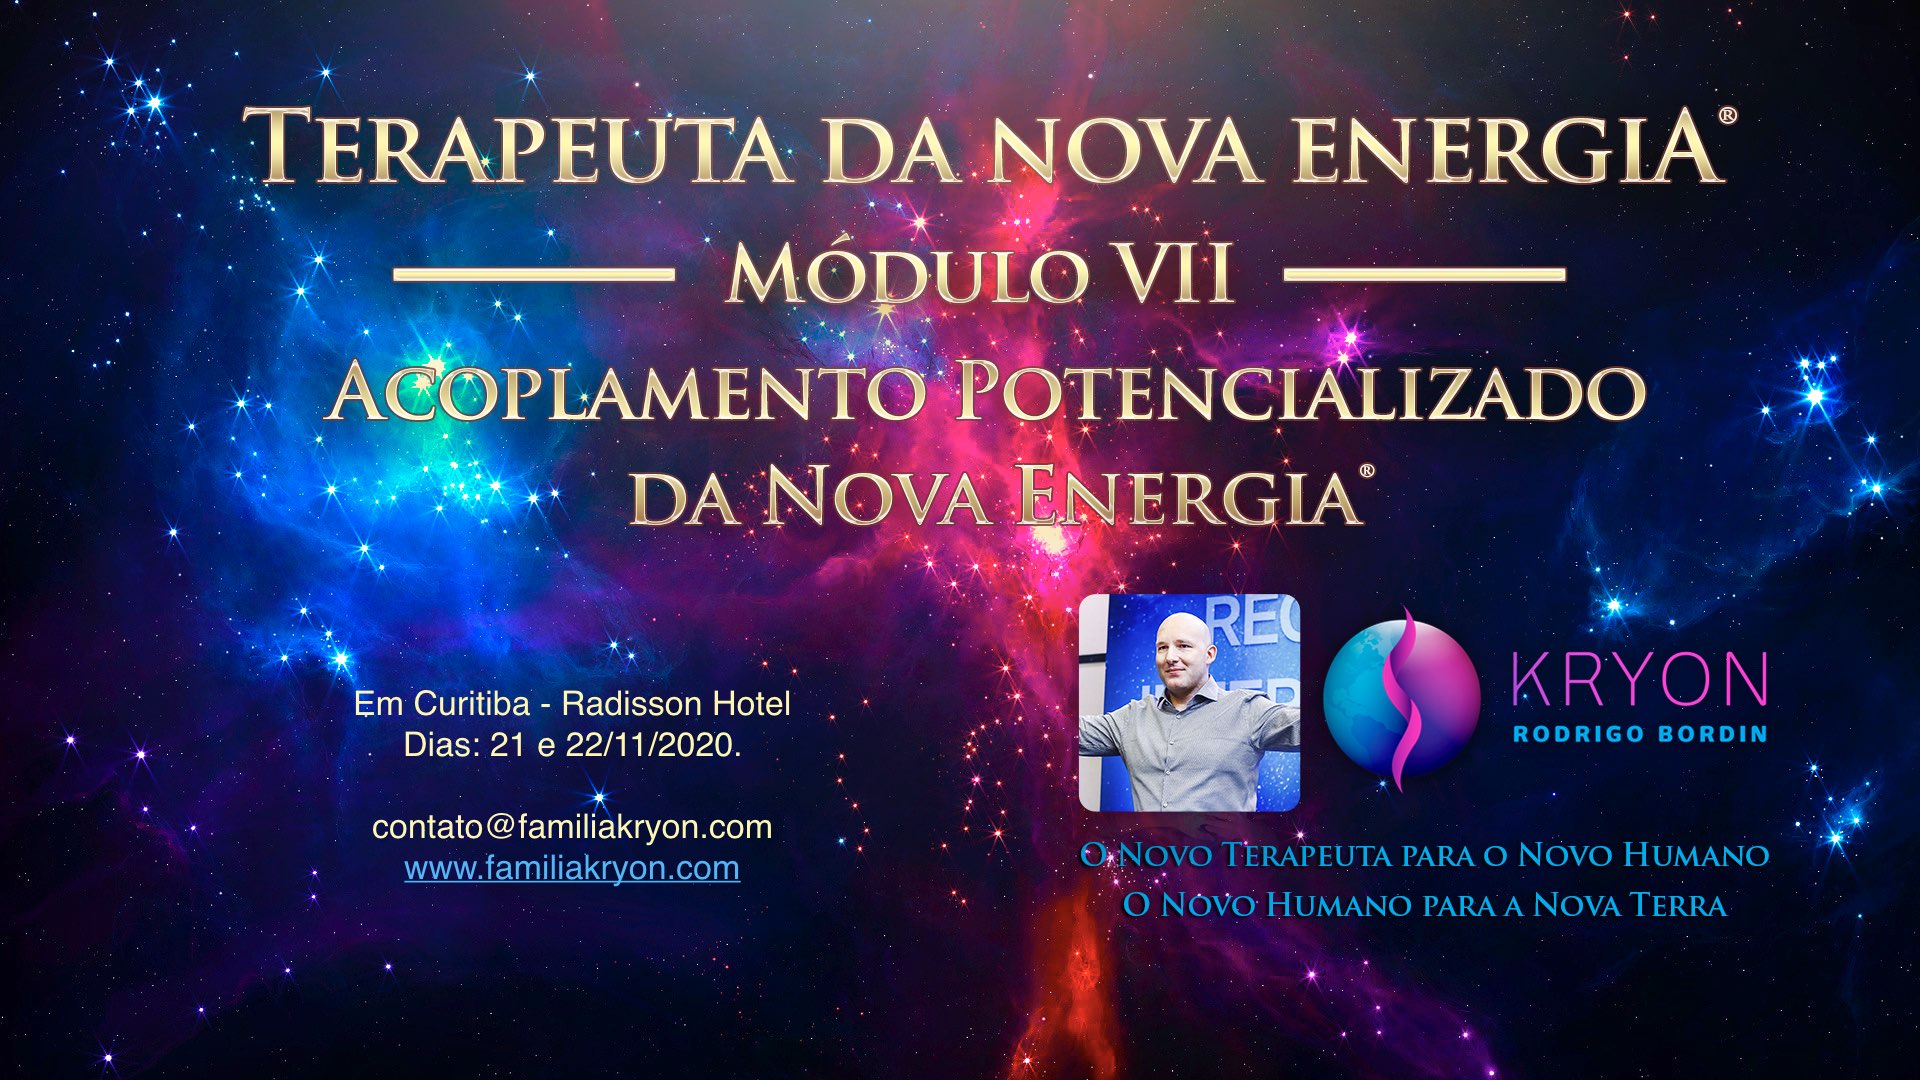 Terapeuta da Nova Energia® - Módulo VII - Acoplamento Potencializado da Nova Energia®